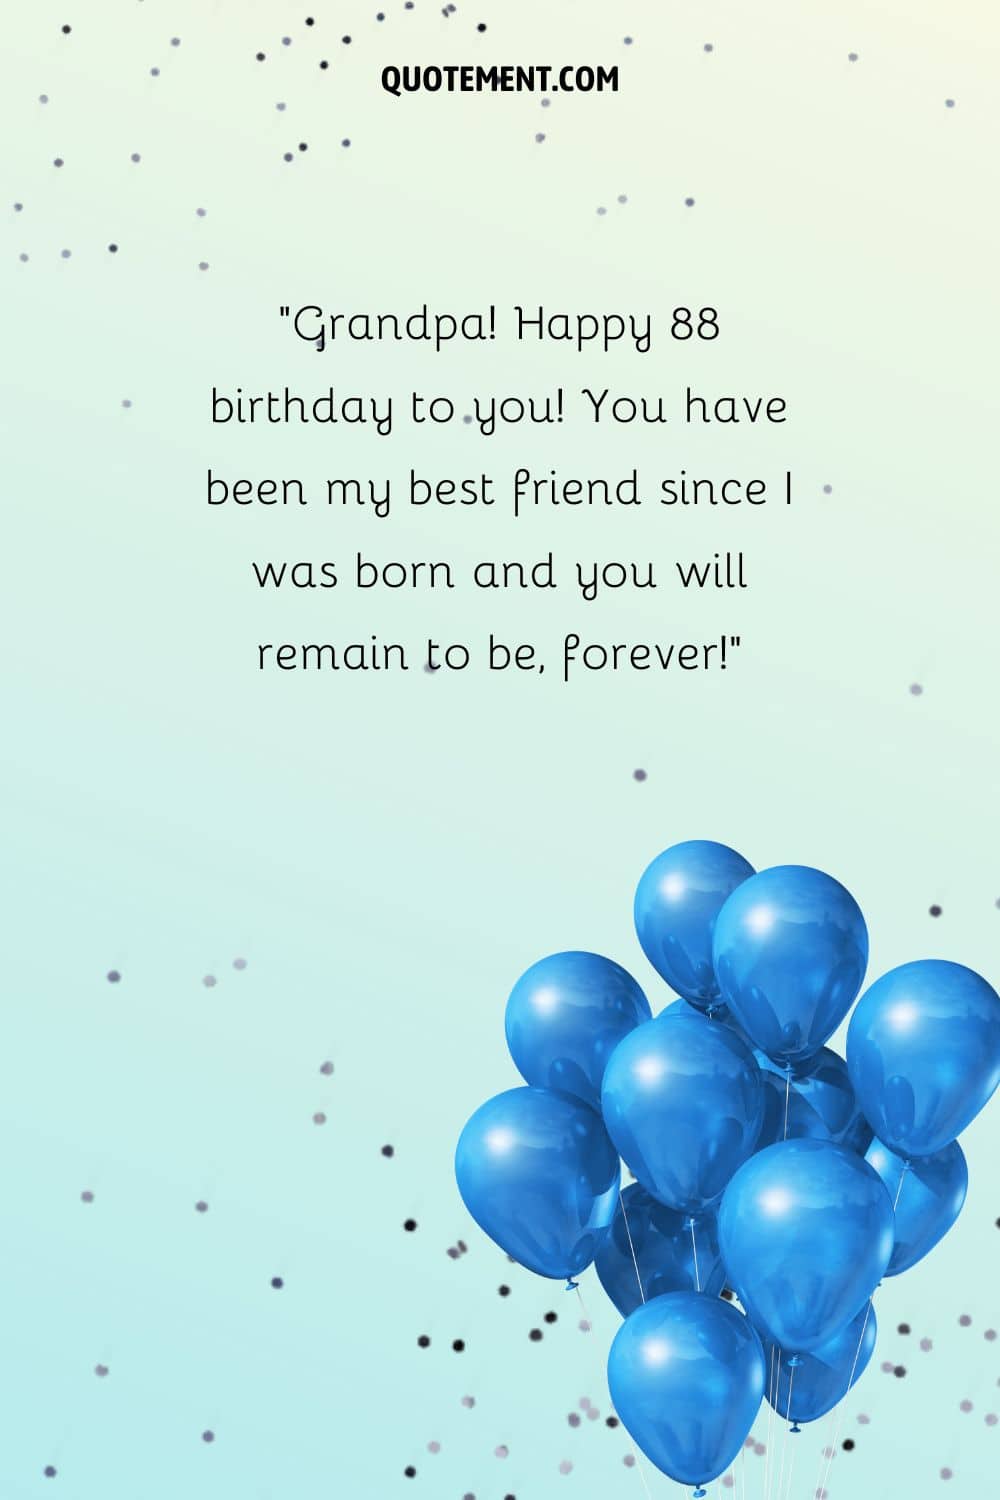 Grandpa! Happy 88 birthday to you!